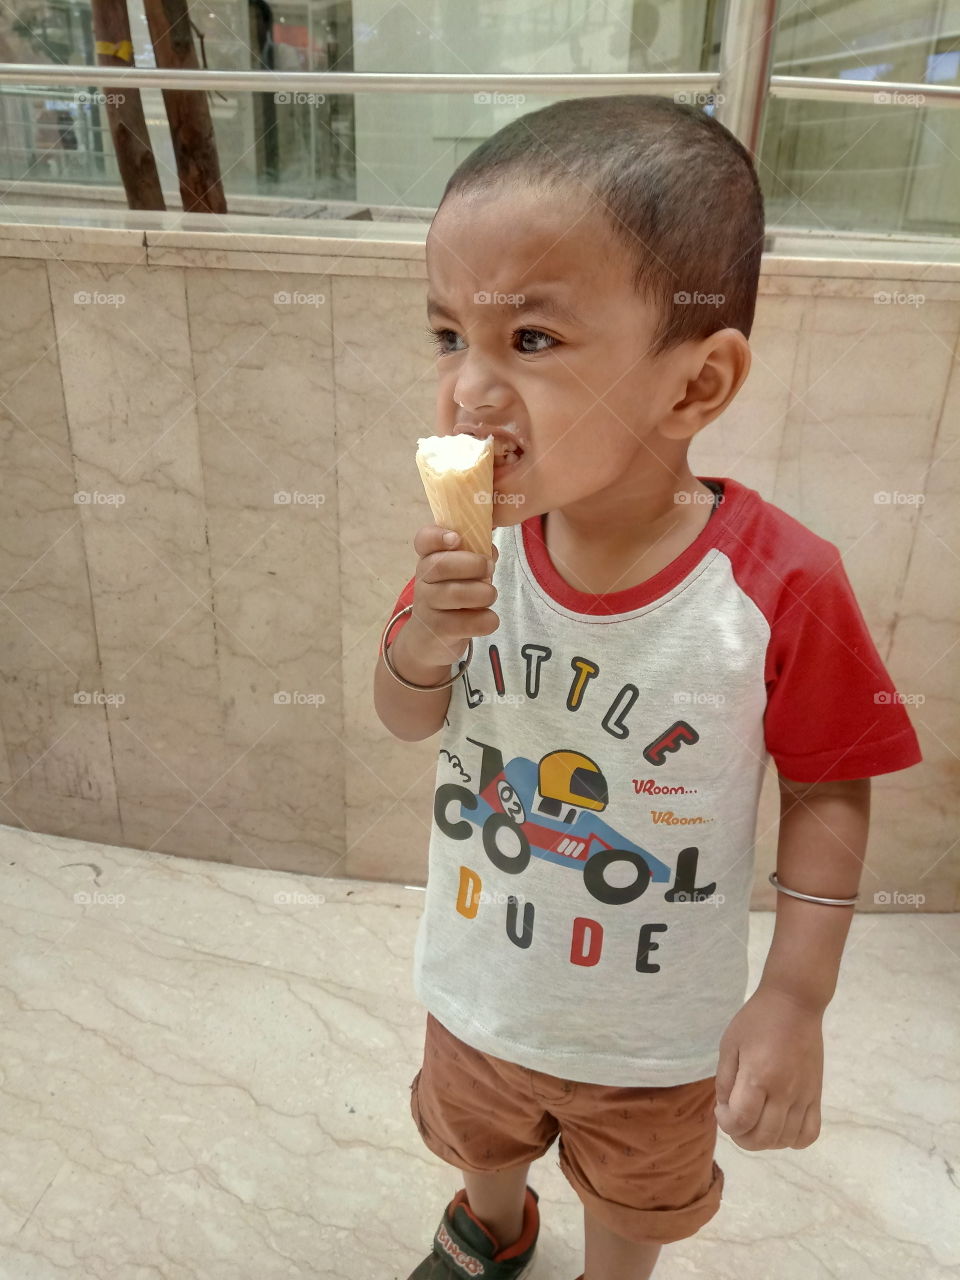 Eating Ice cream